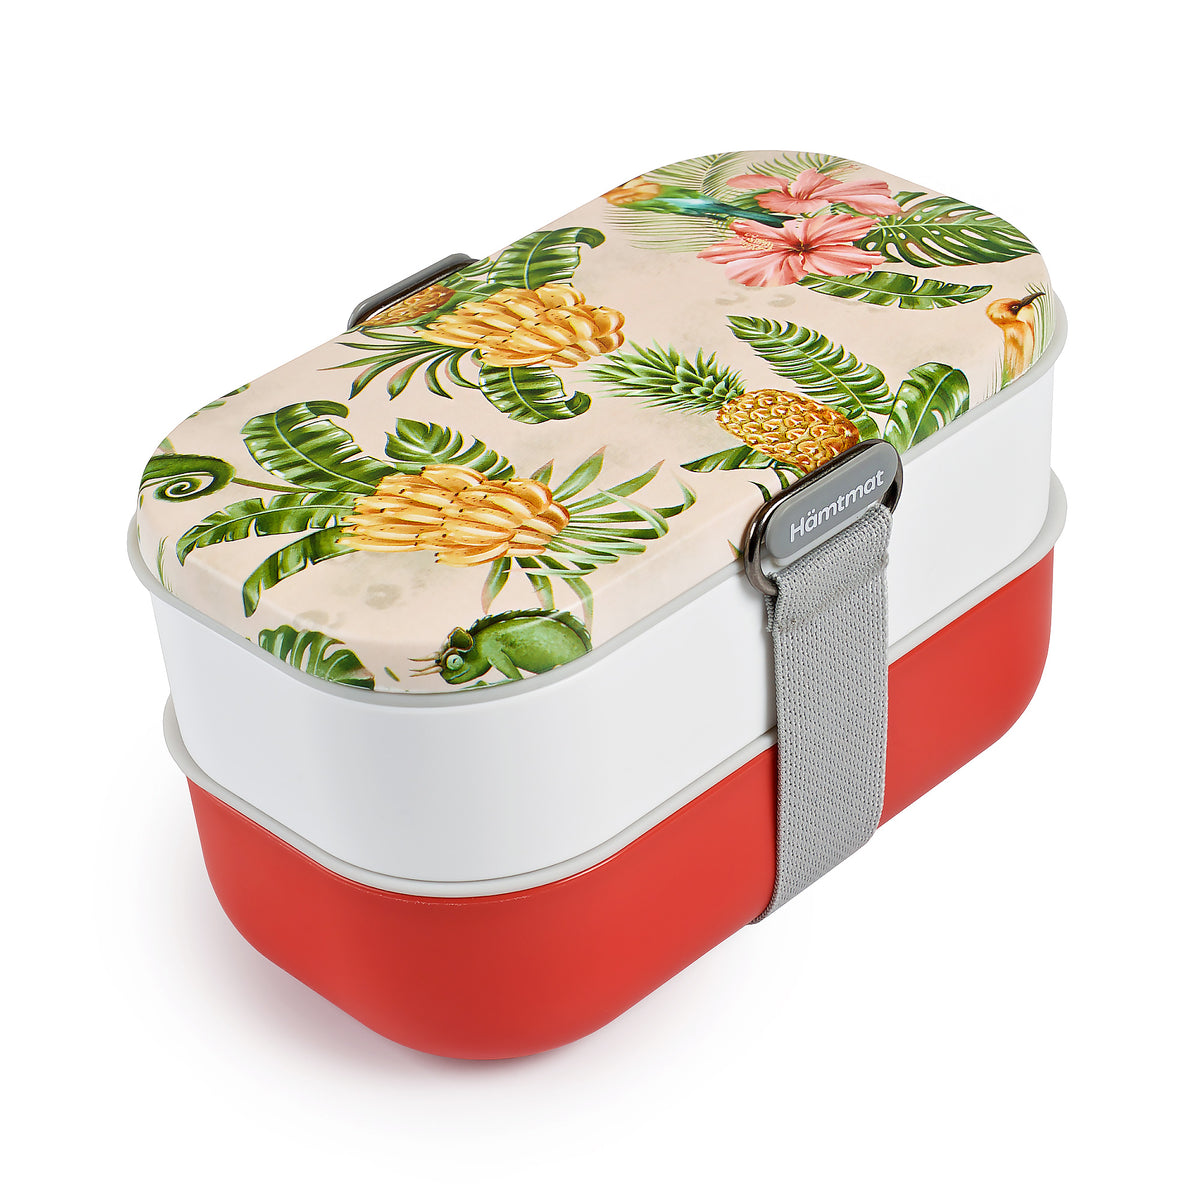 Vegan Bento Box - Gathering Dreams